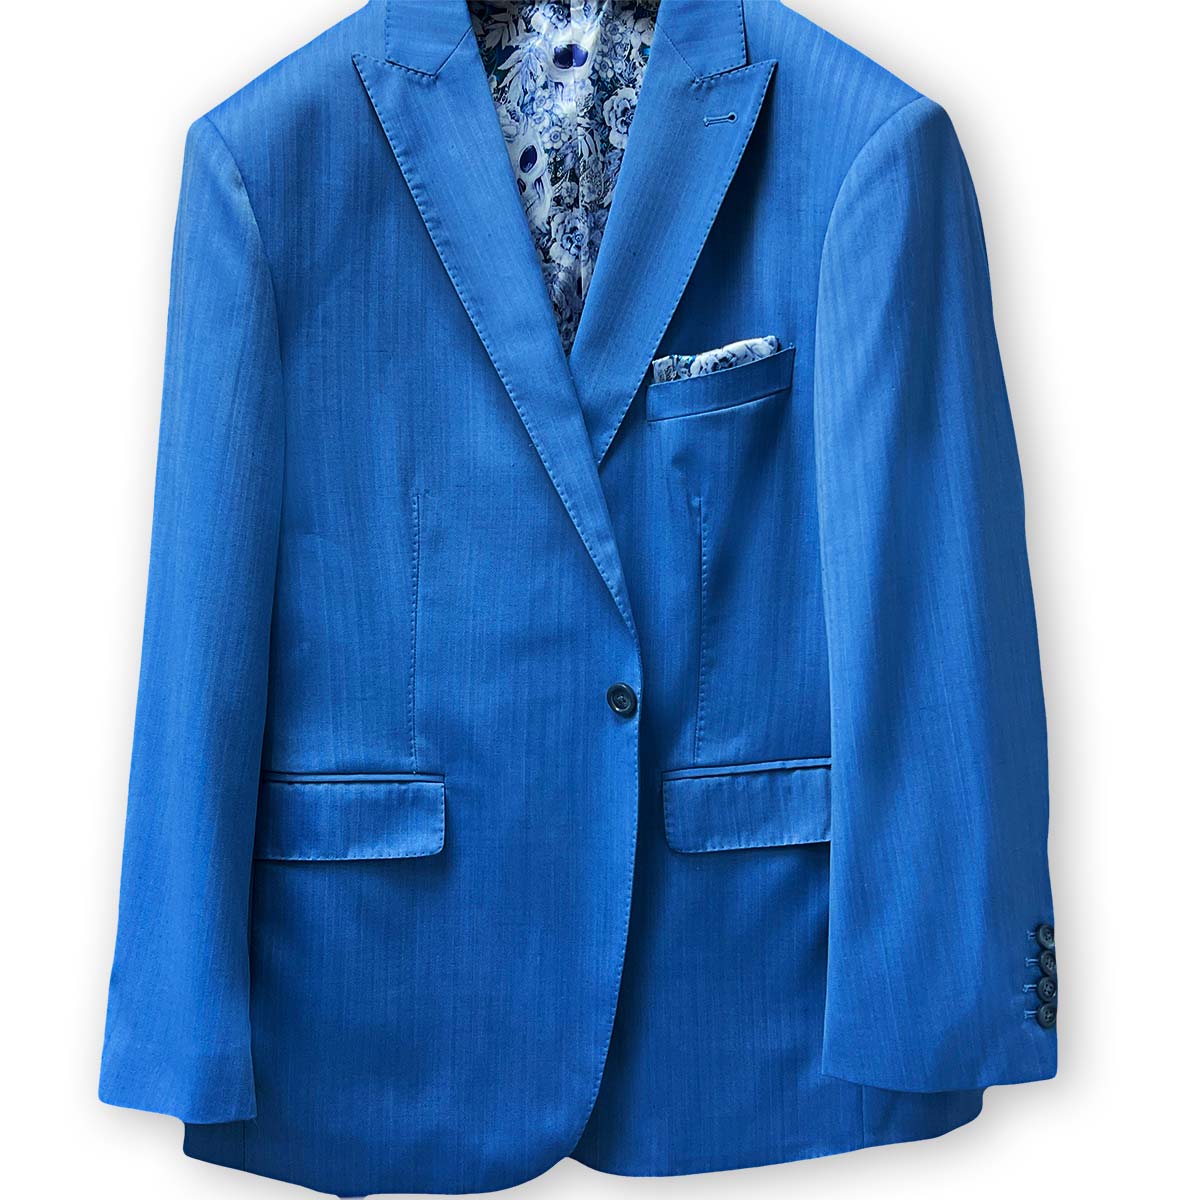 Men's blue herringbone suit tailored from 100% Australian Merino wool, available at Men's Wearhouse near you.